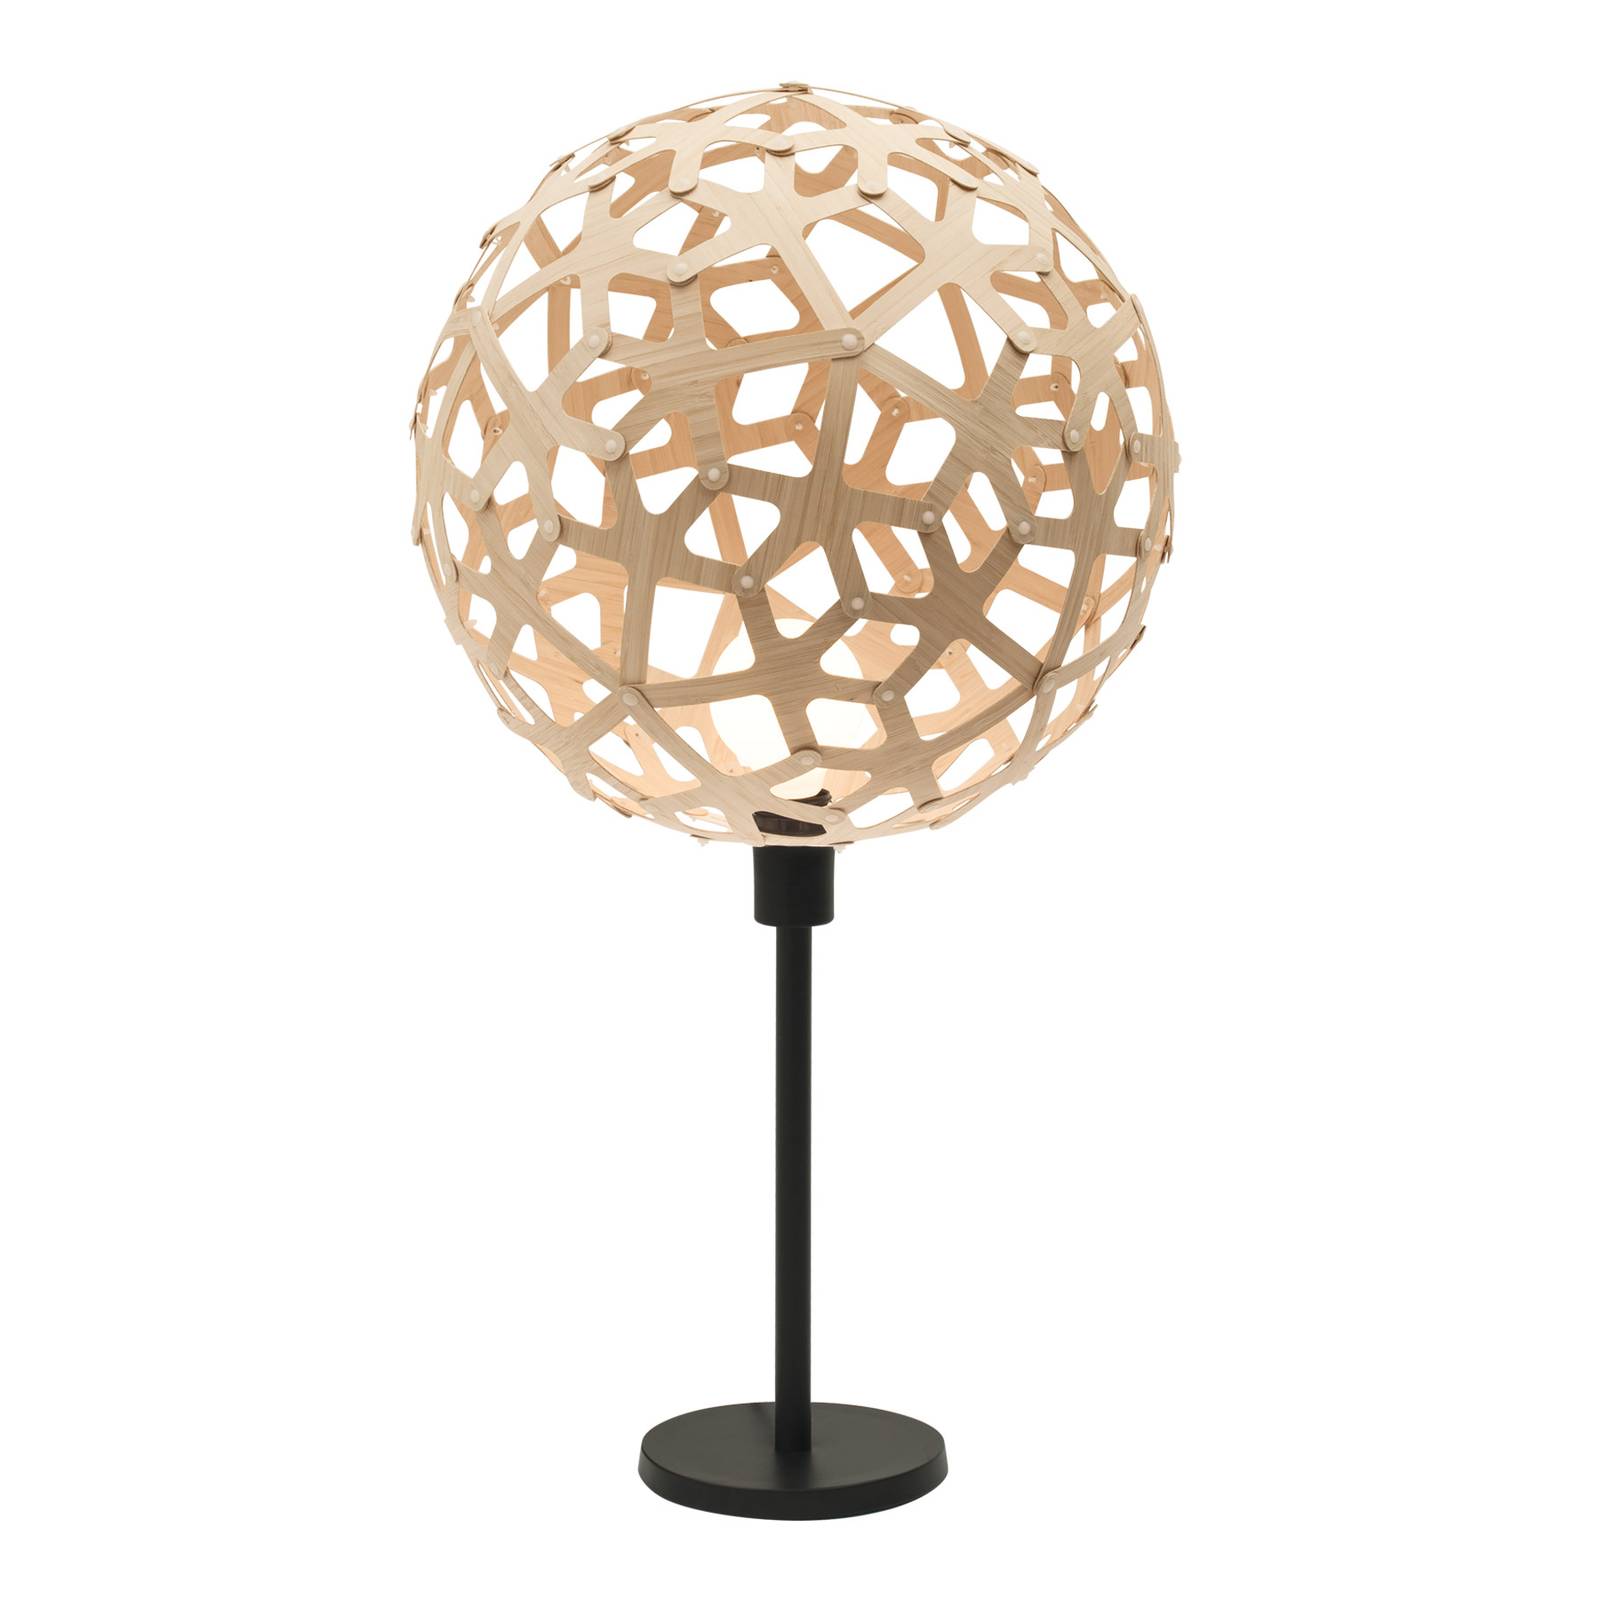 E-shop david trubridge Coral stolička lampa bambus prírodná